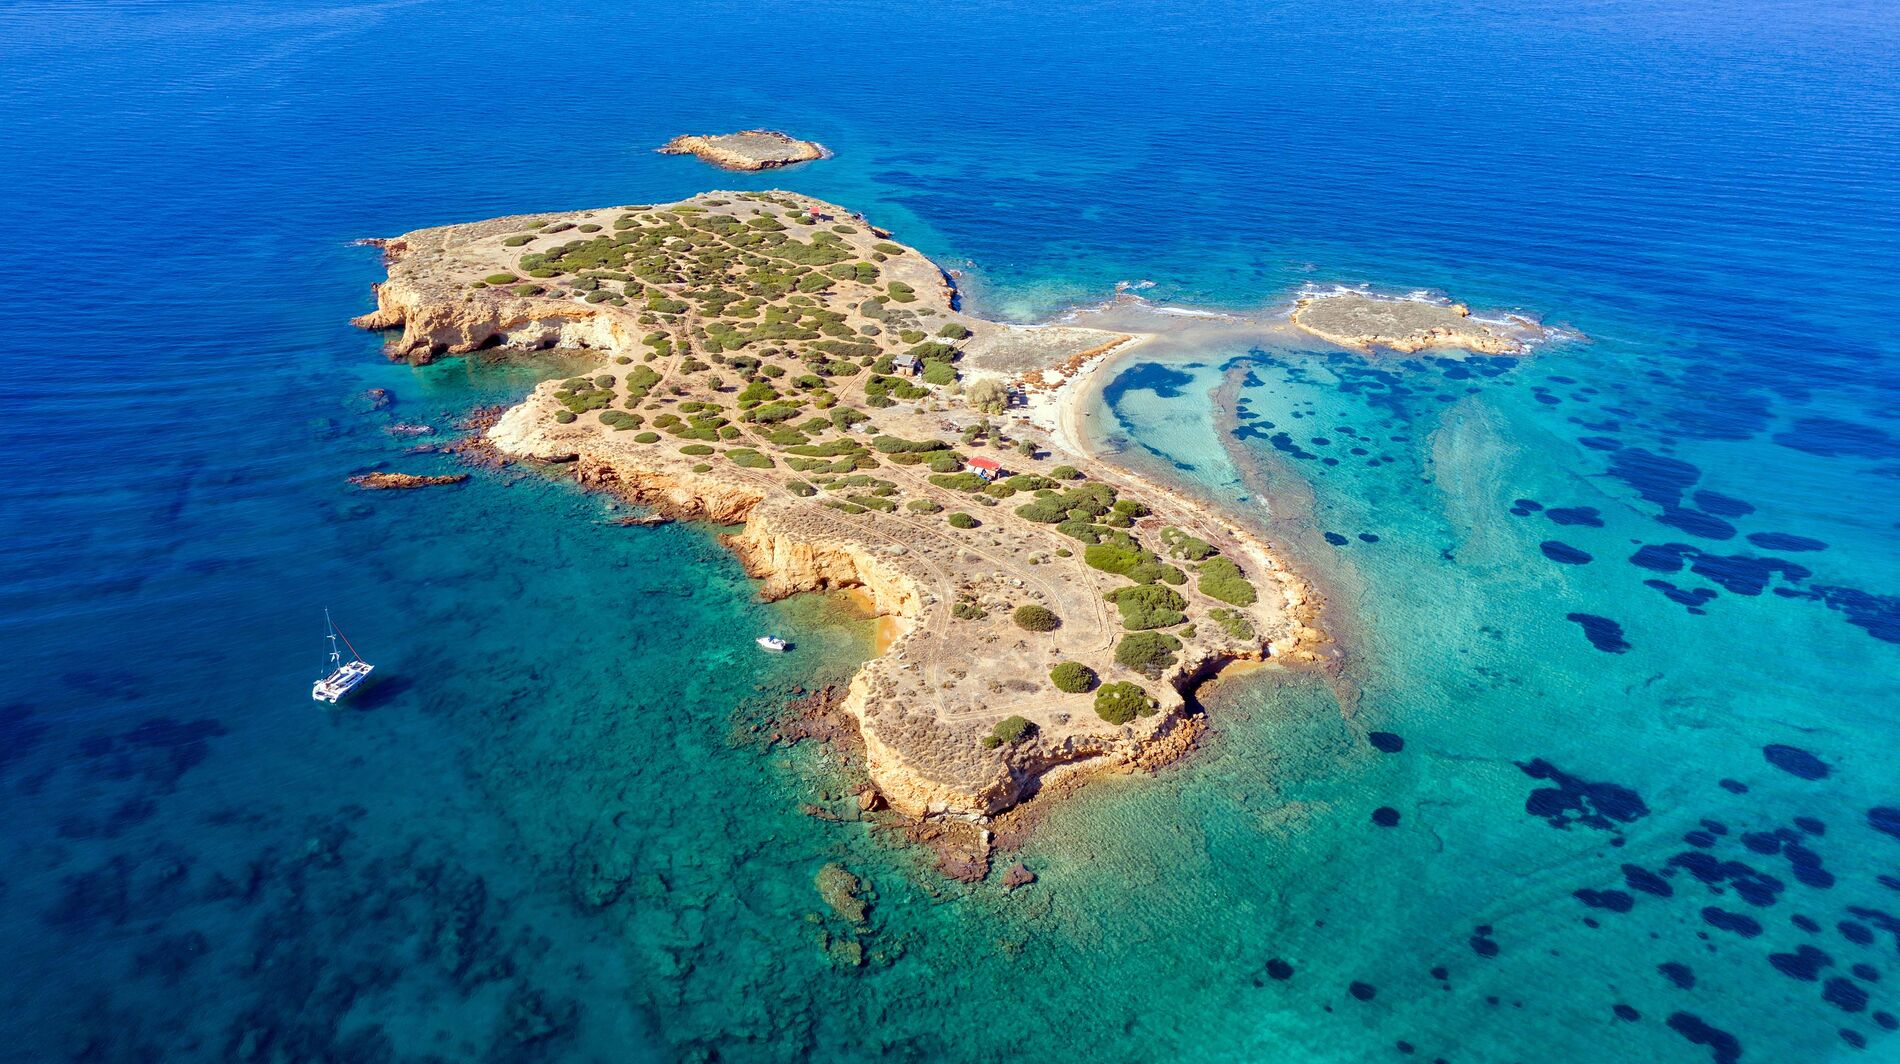 Ydrousa or Katramonisi island